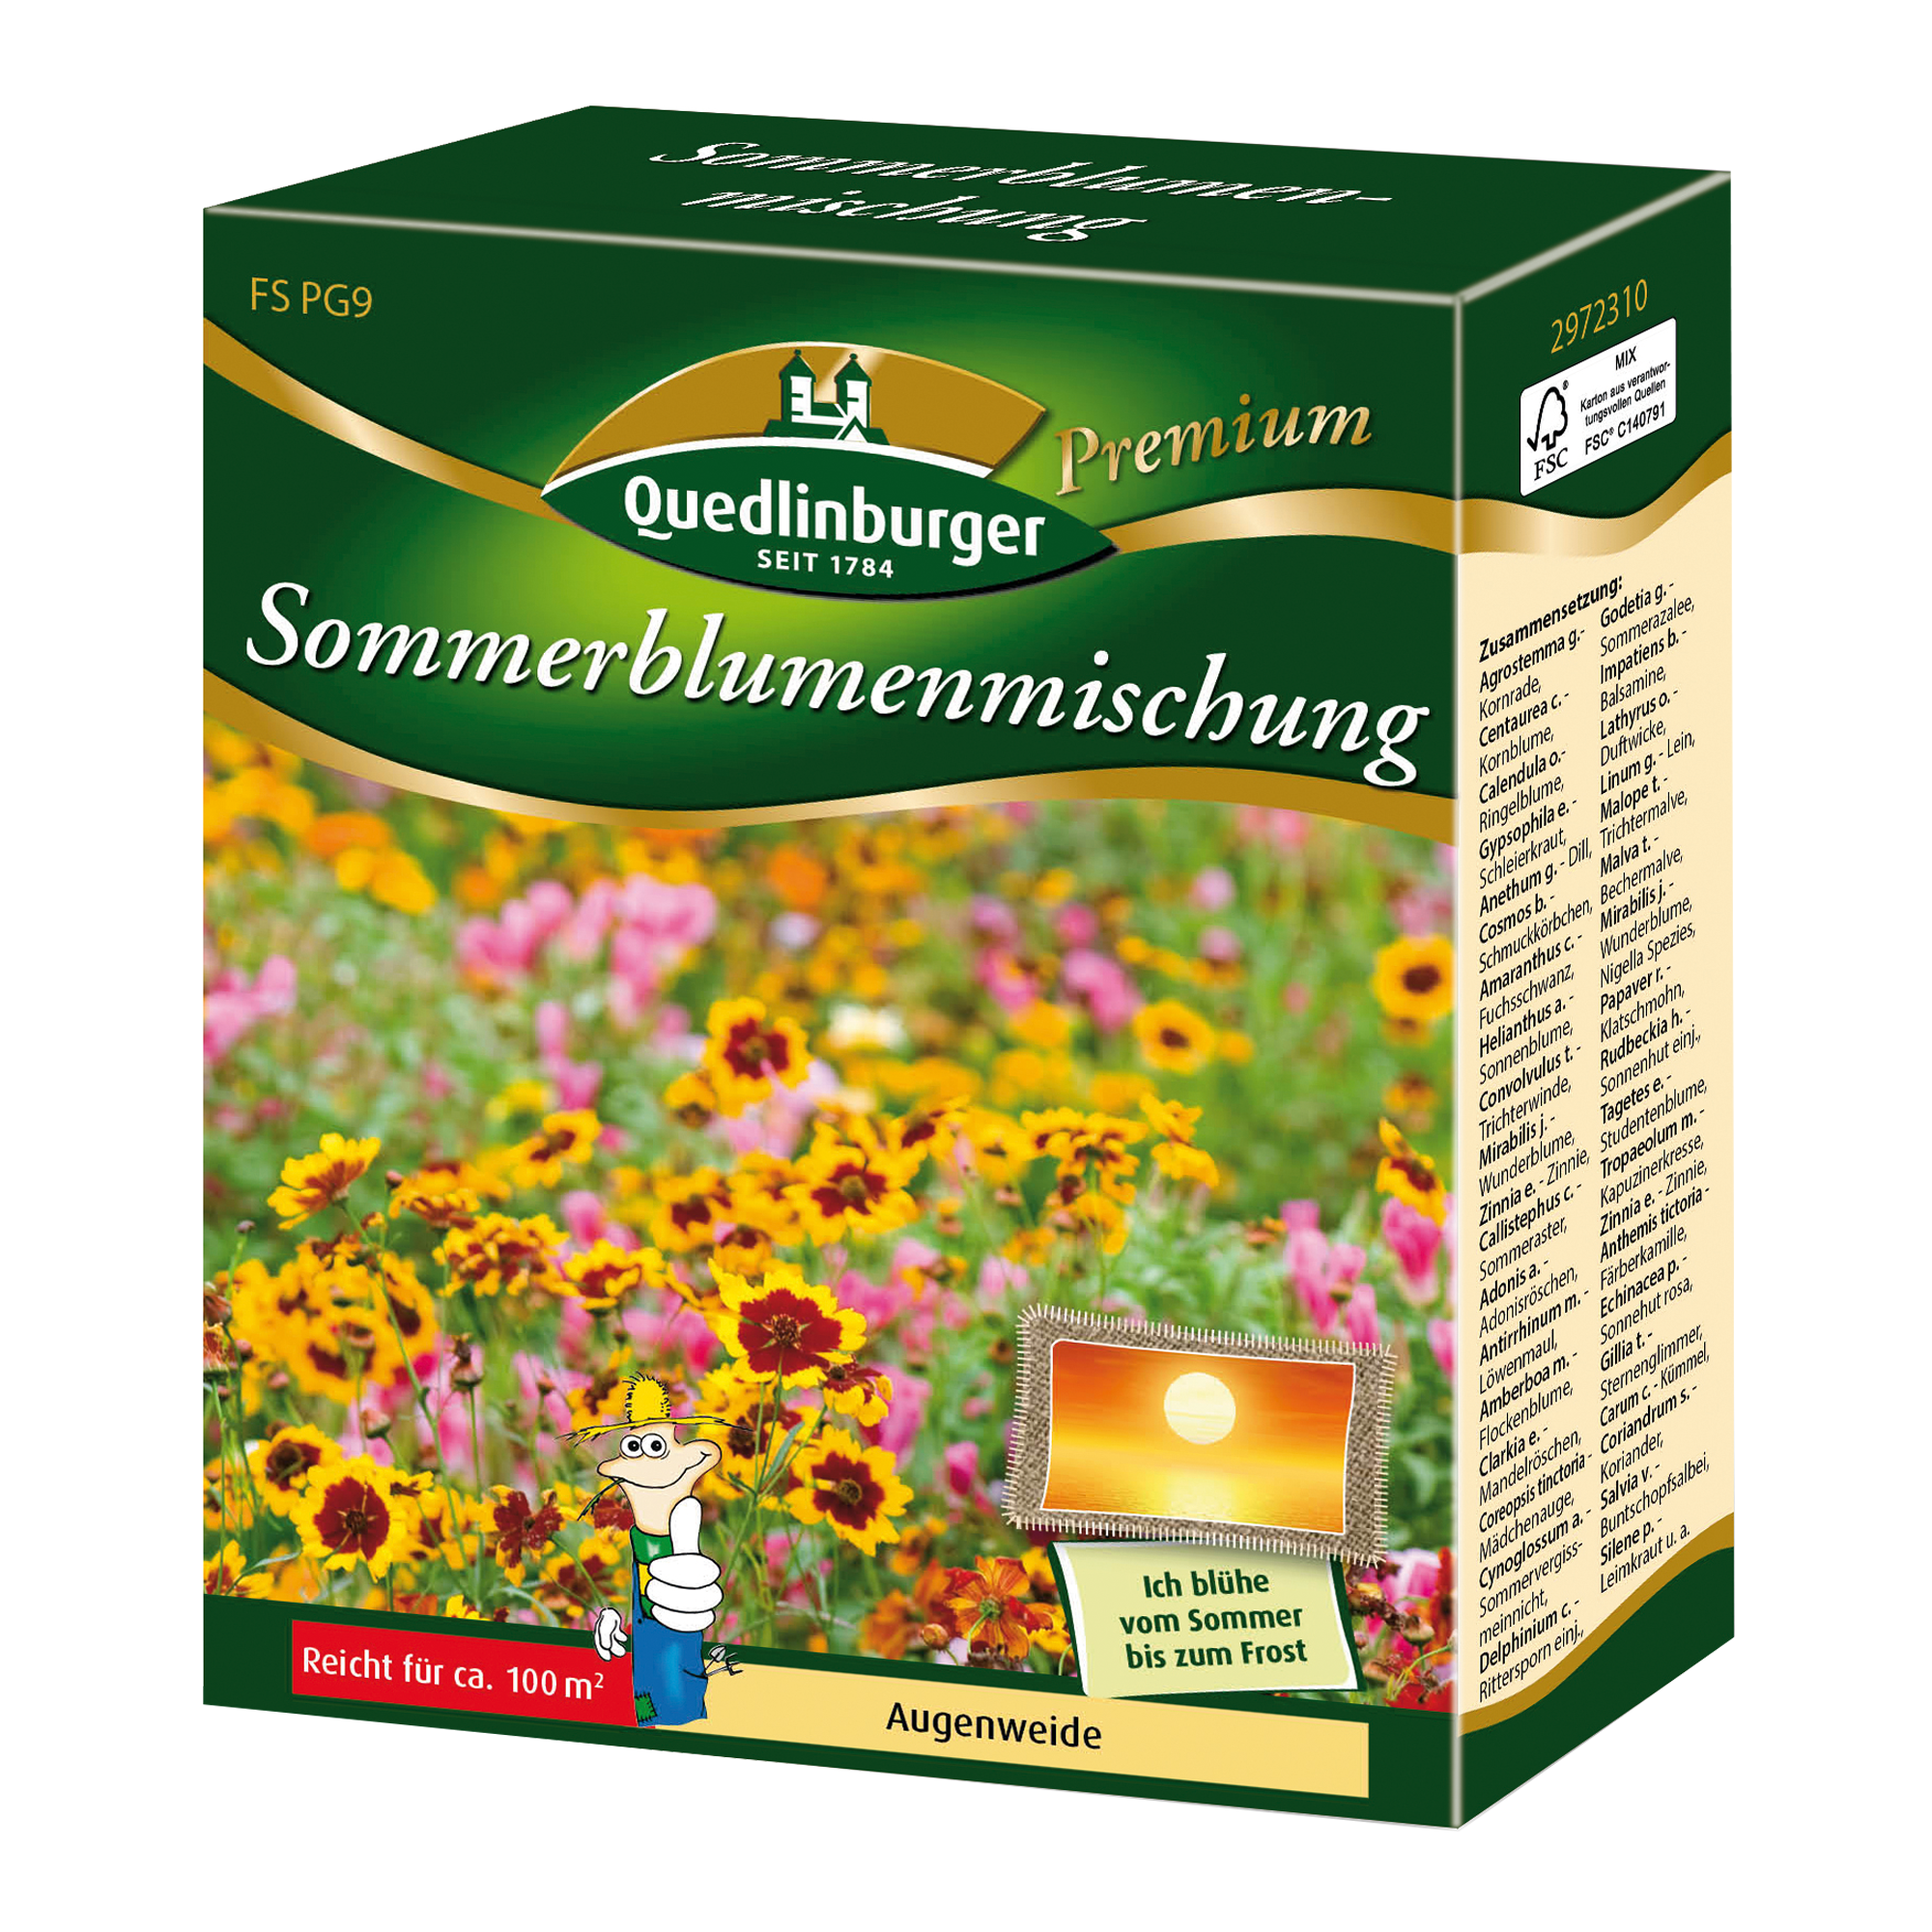 Blumenmischung 'Sommerblumen' + product picture